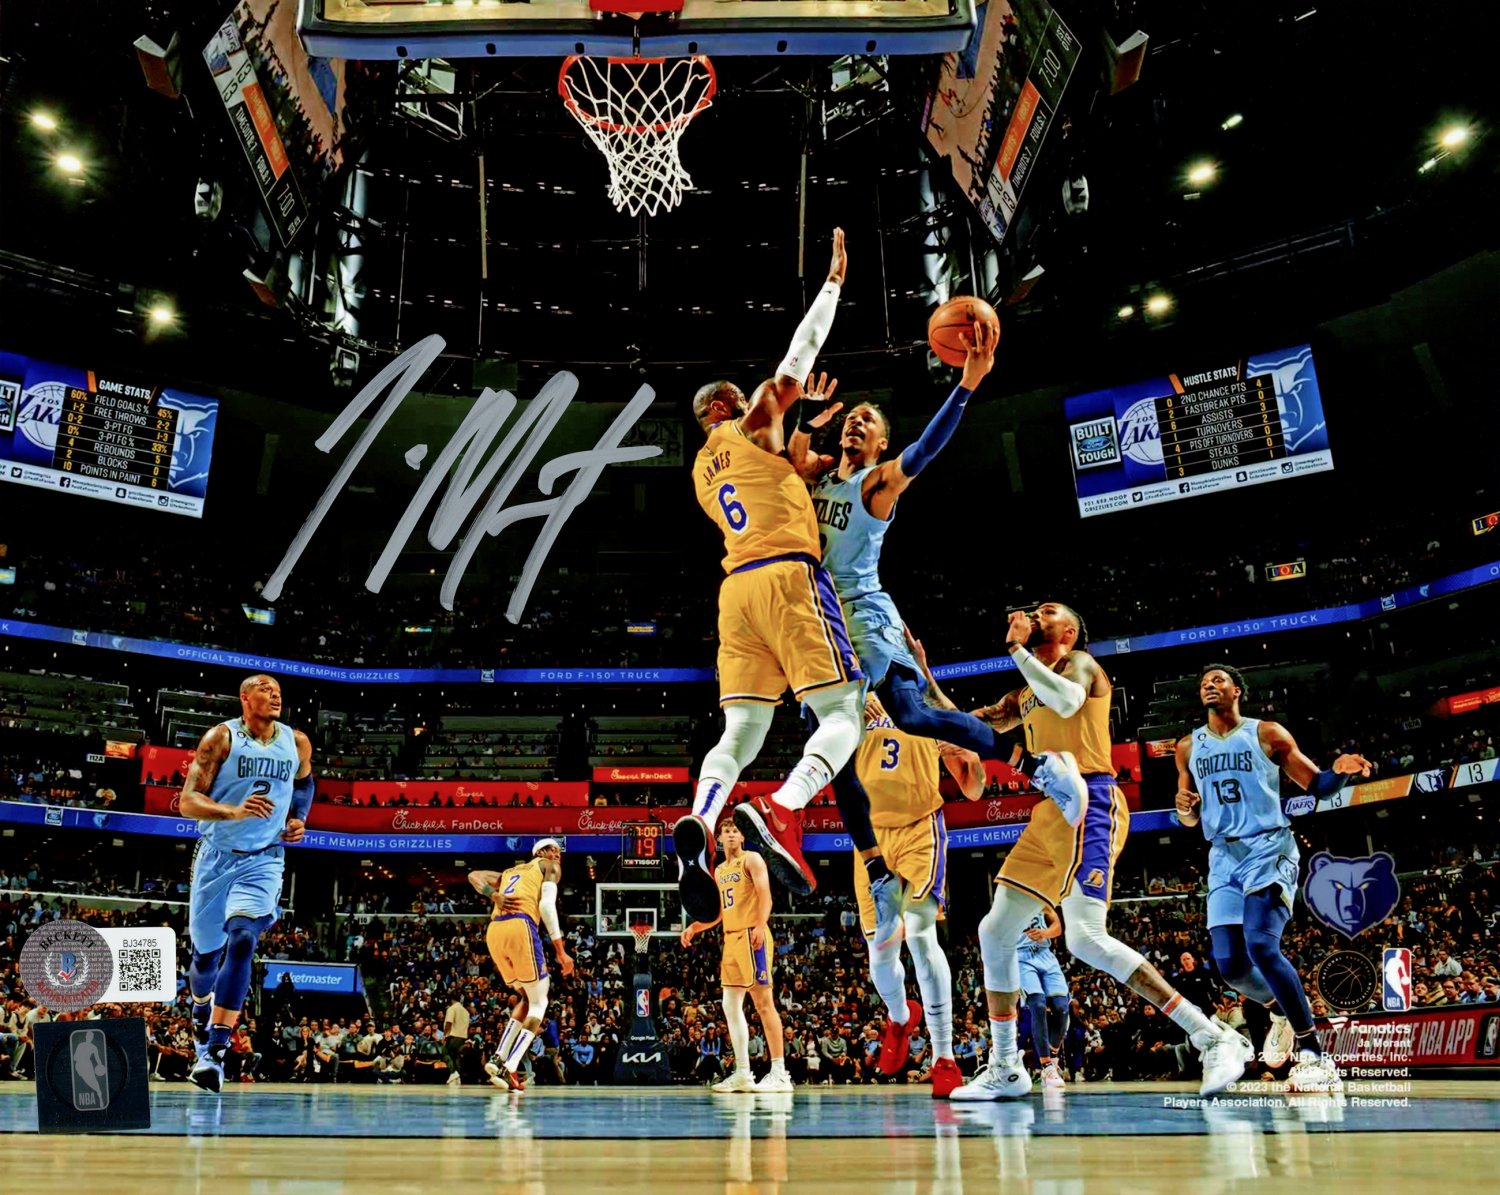 Ja Morant Autographed Memphis Custom Basketball Jersey - BAS at